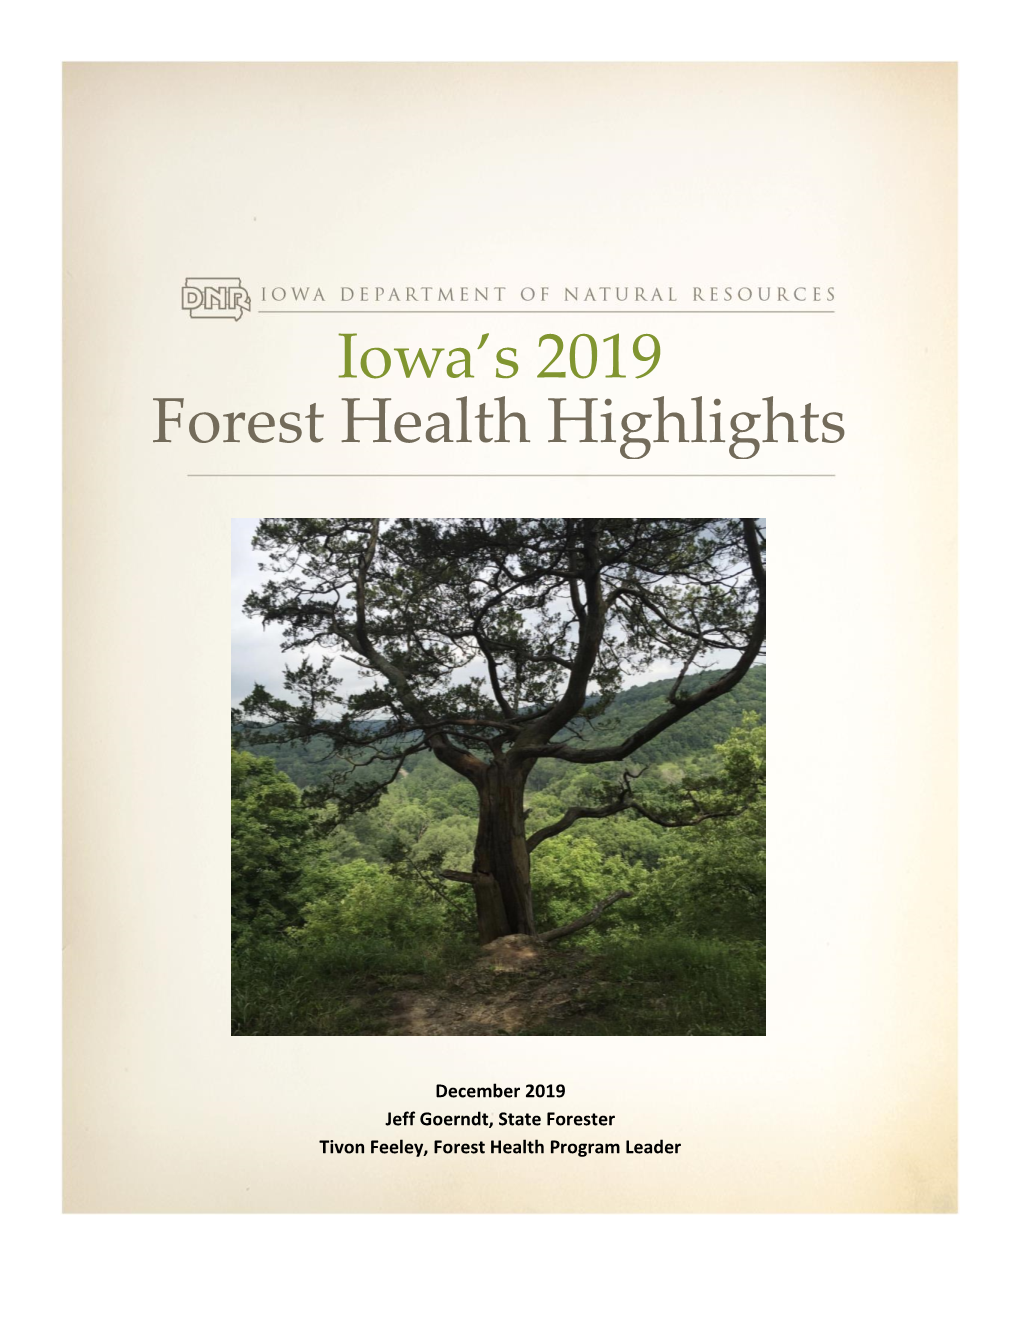 Iowa's Forest Health Highlights 2019